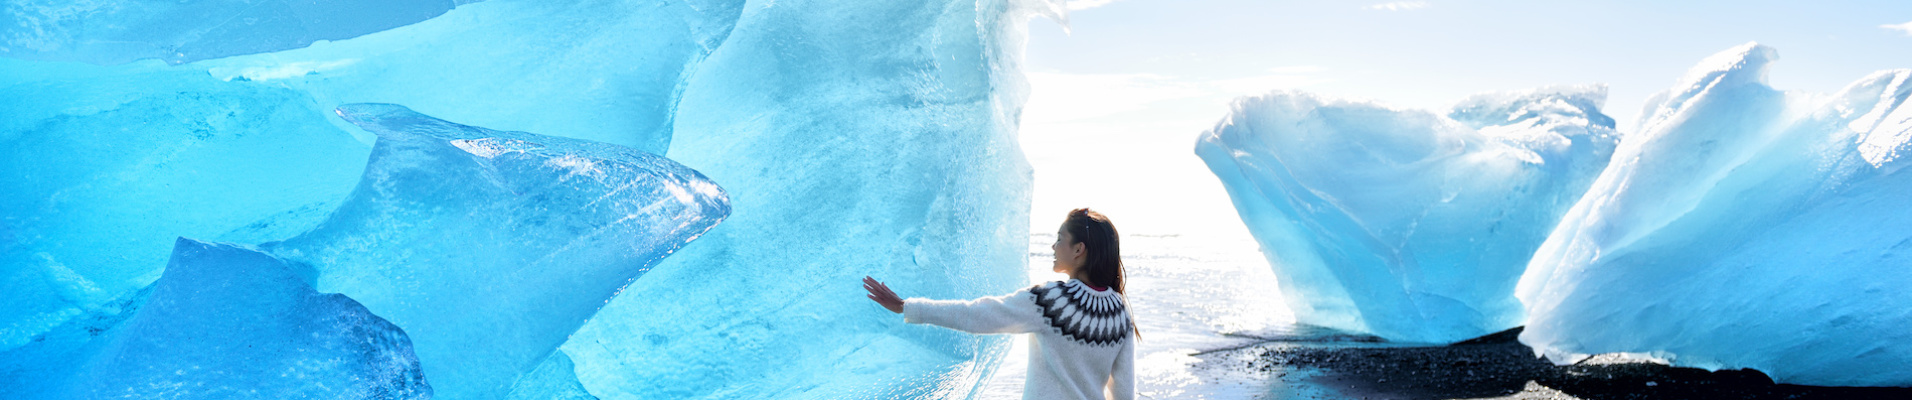 femme touchant un iceberg en islande